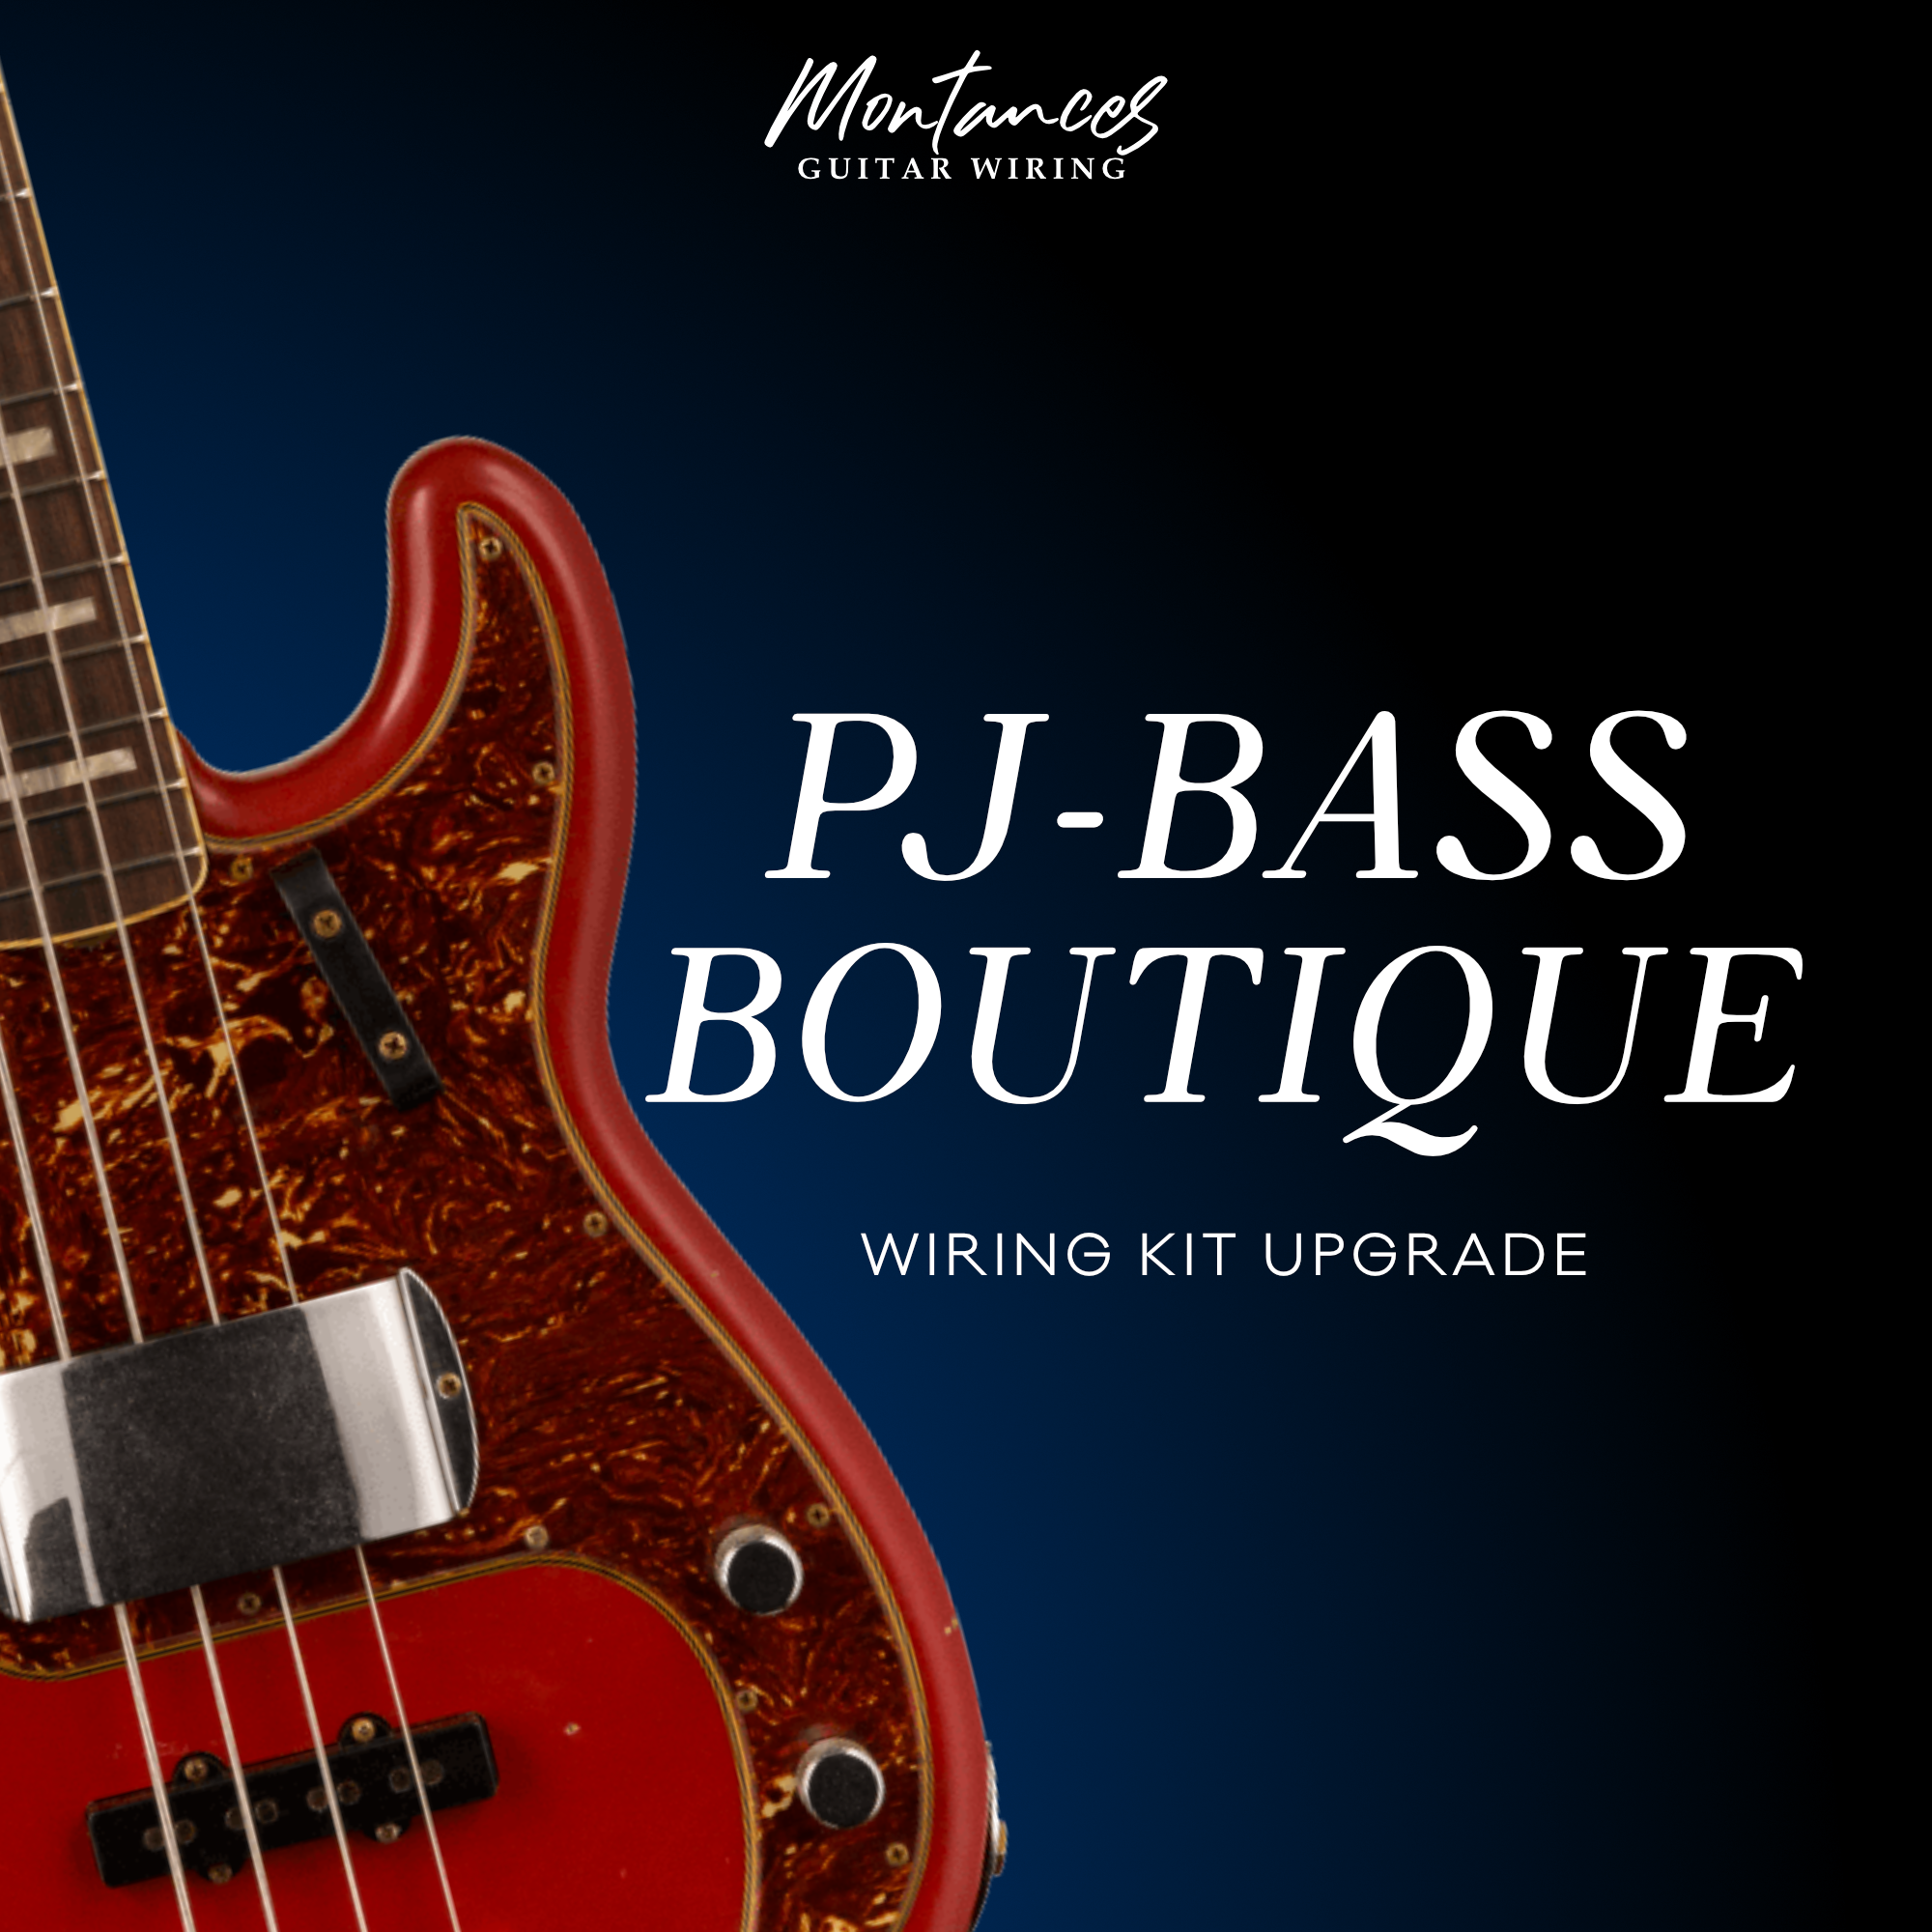 Precision Jazz PJ Bass Wiring Kit Boutique Set